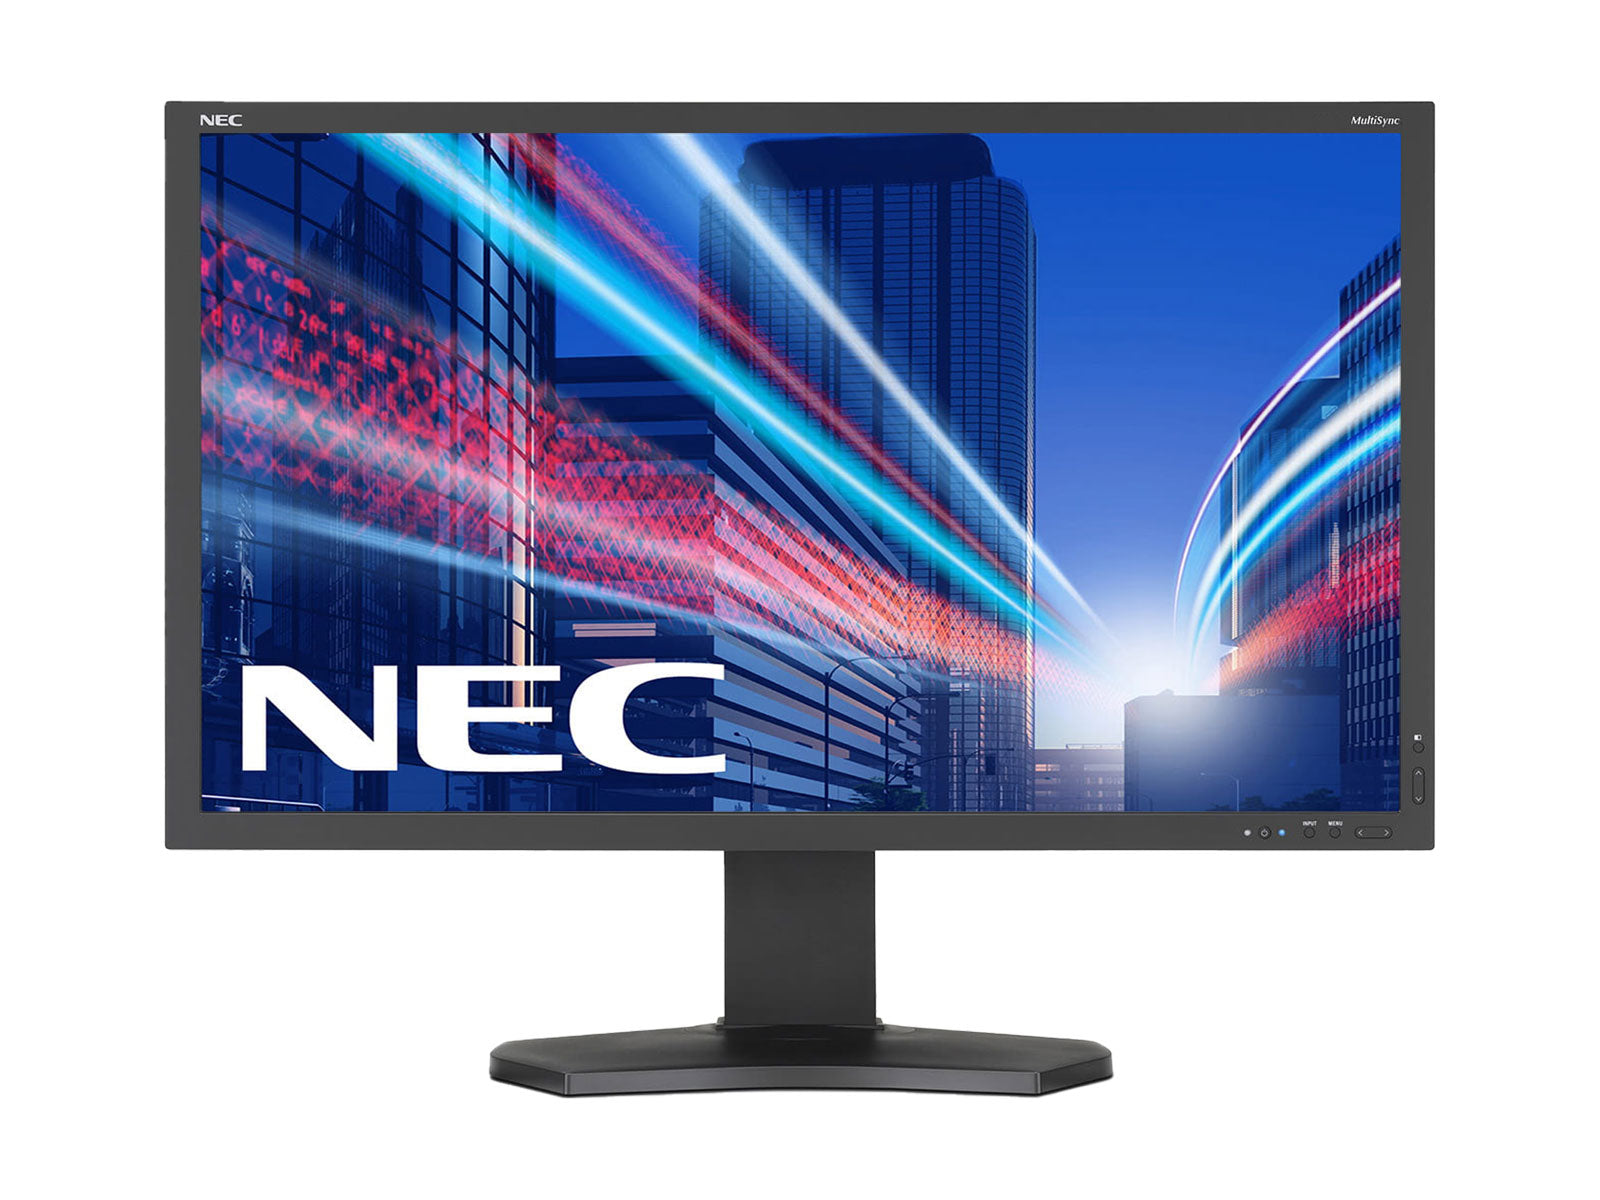 NEC MultiSync PA241W 24" WUXGA 1920 x 1200 Widescreen Professional Graphics Display Monitor (PA241W) Monitors.com 